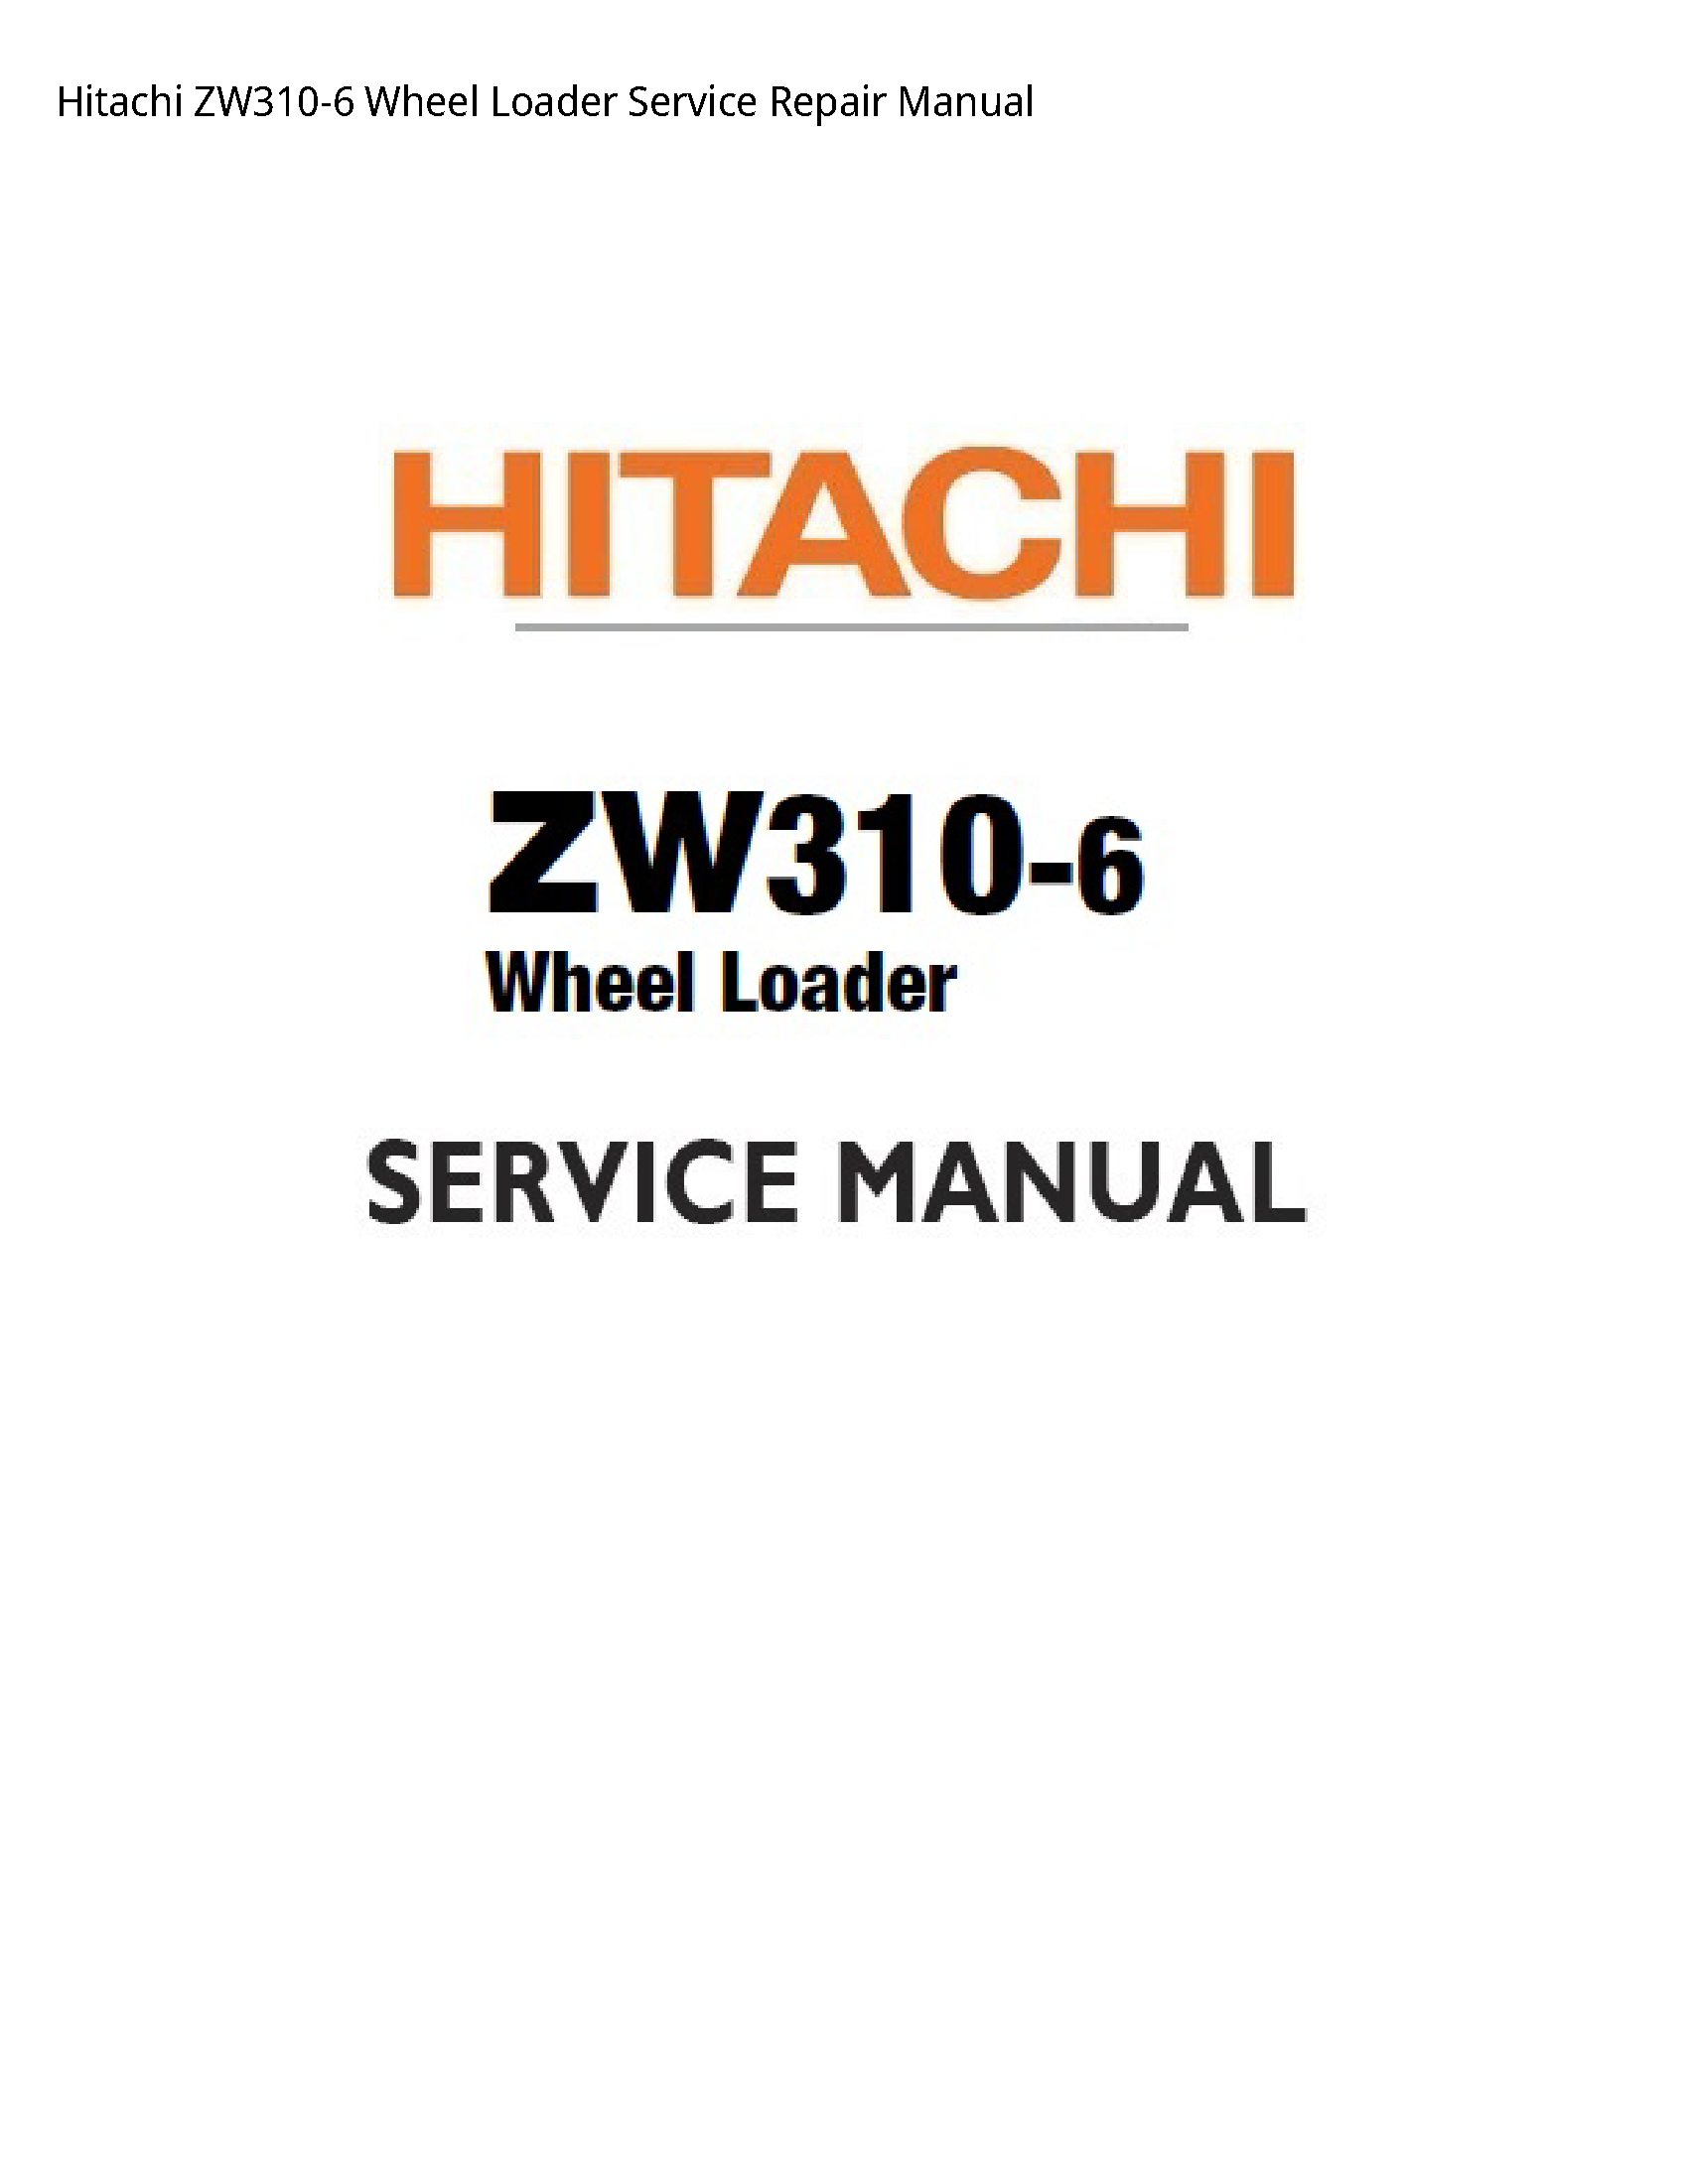 Hitachi ZW310-6 Wheel Loader manual